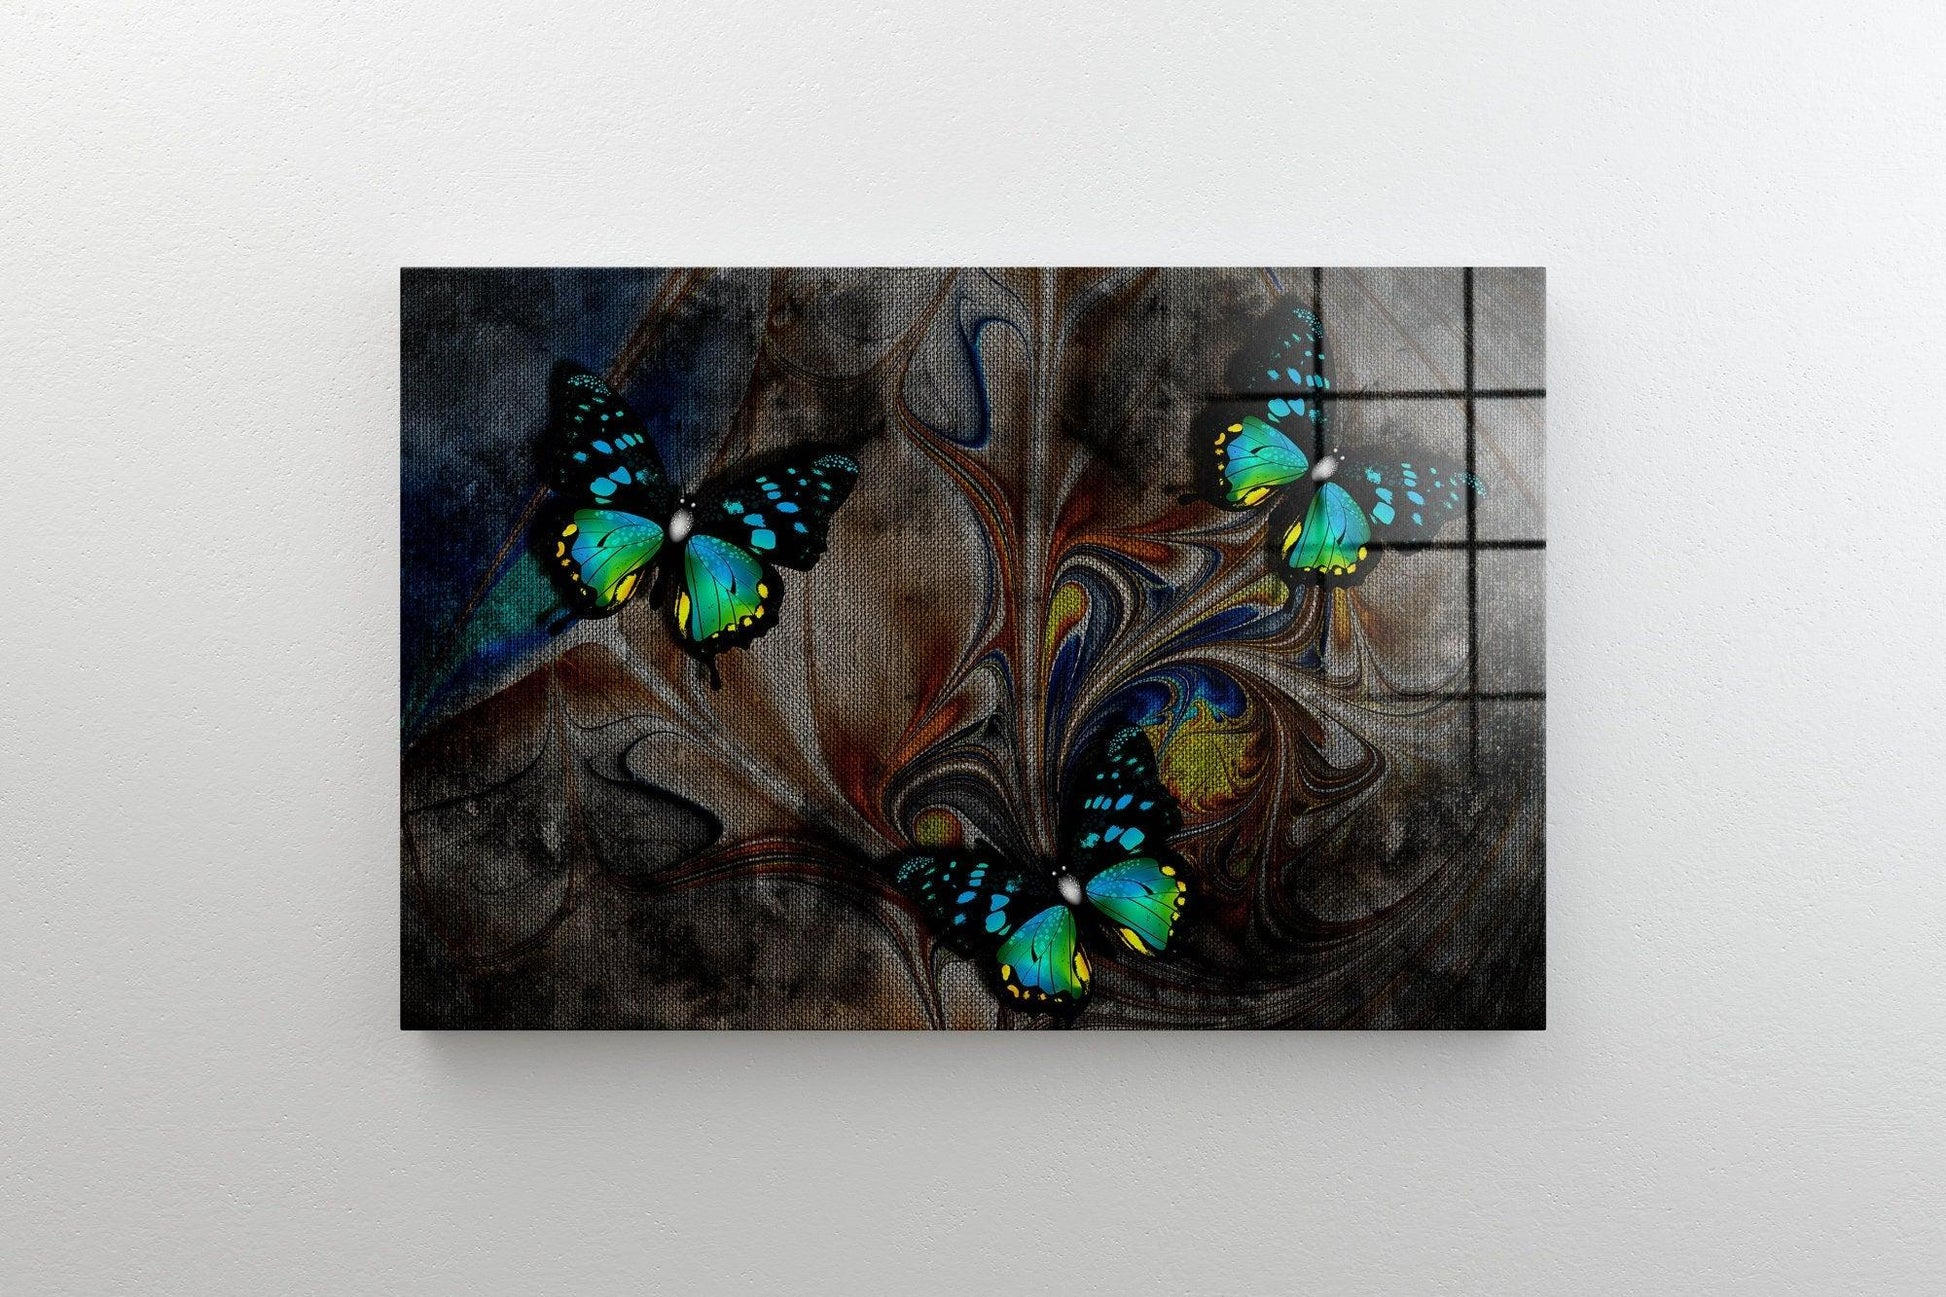 3d Butterflies canvas wall decor| Colorized Glass Printing Wall Art, Glass Wall Decor, acrylic glass wall art, Tempered Glass, abstract art